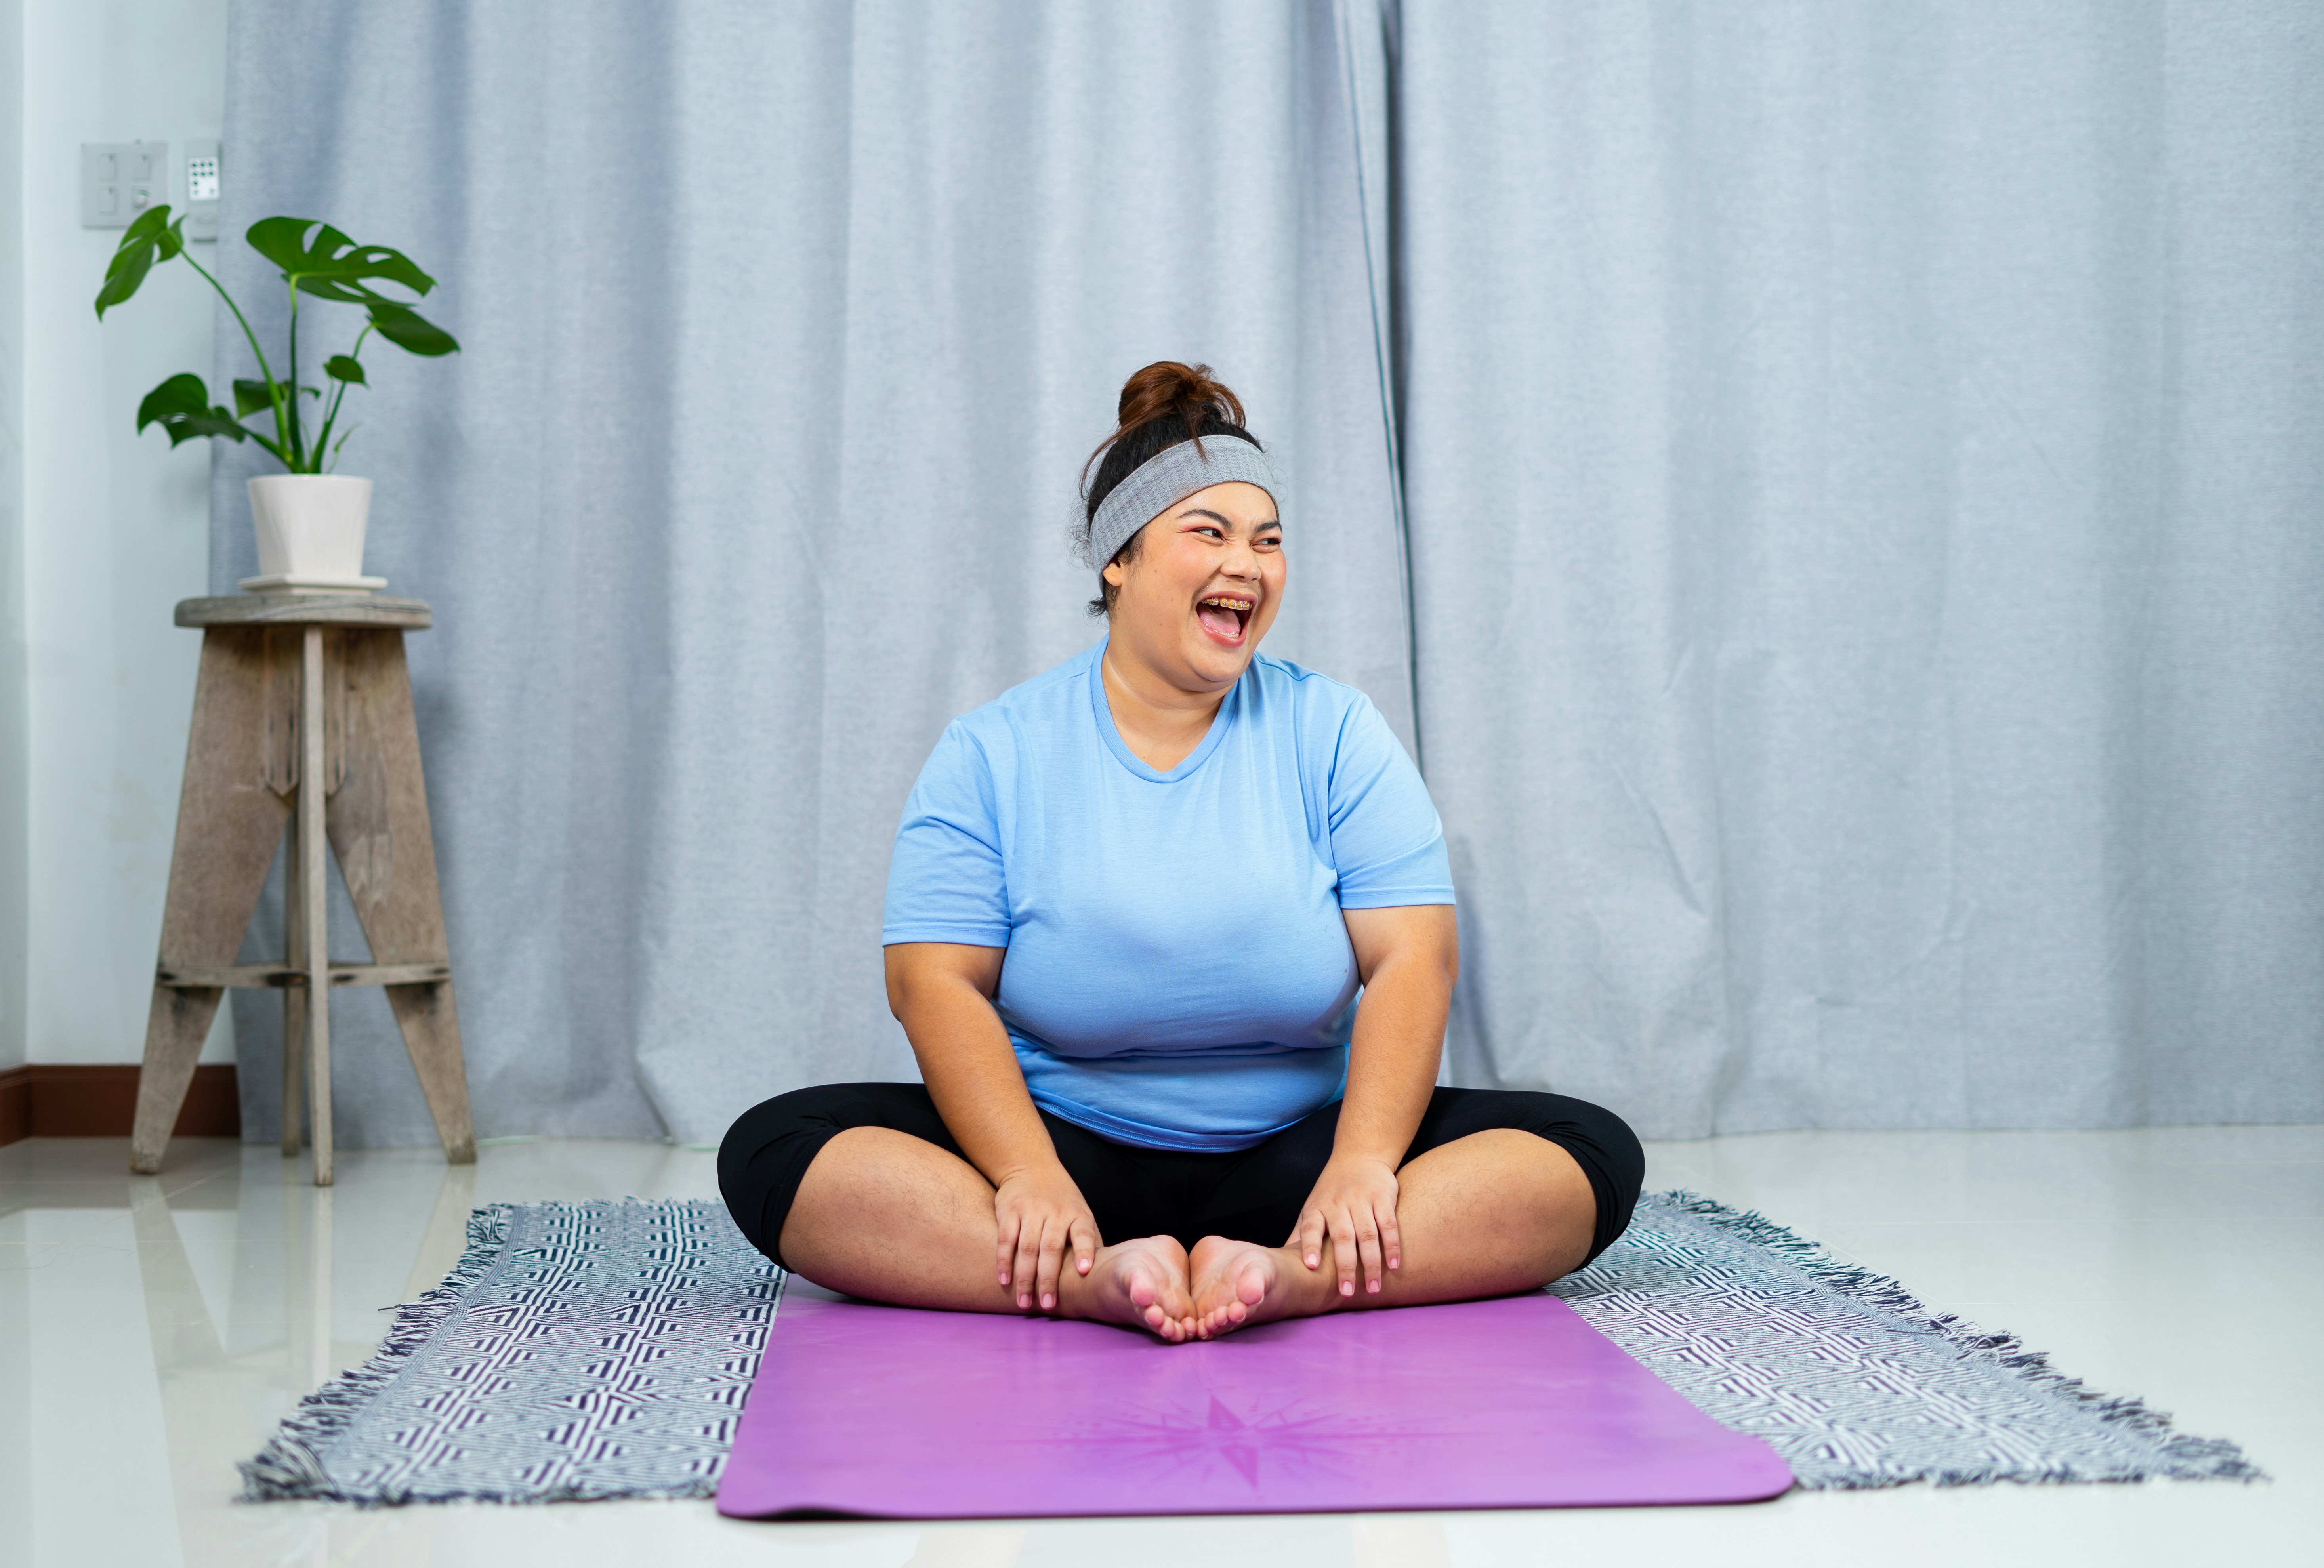 Yoga For Beginners - The Basics - Yoga With Adriene 